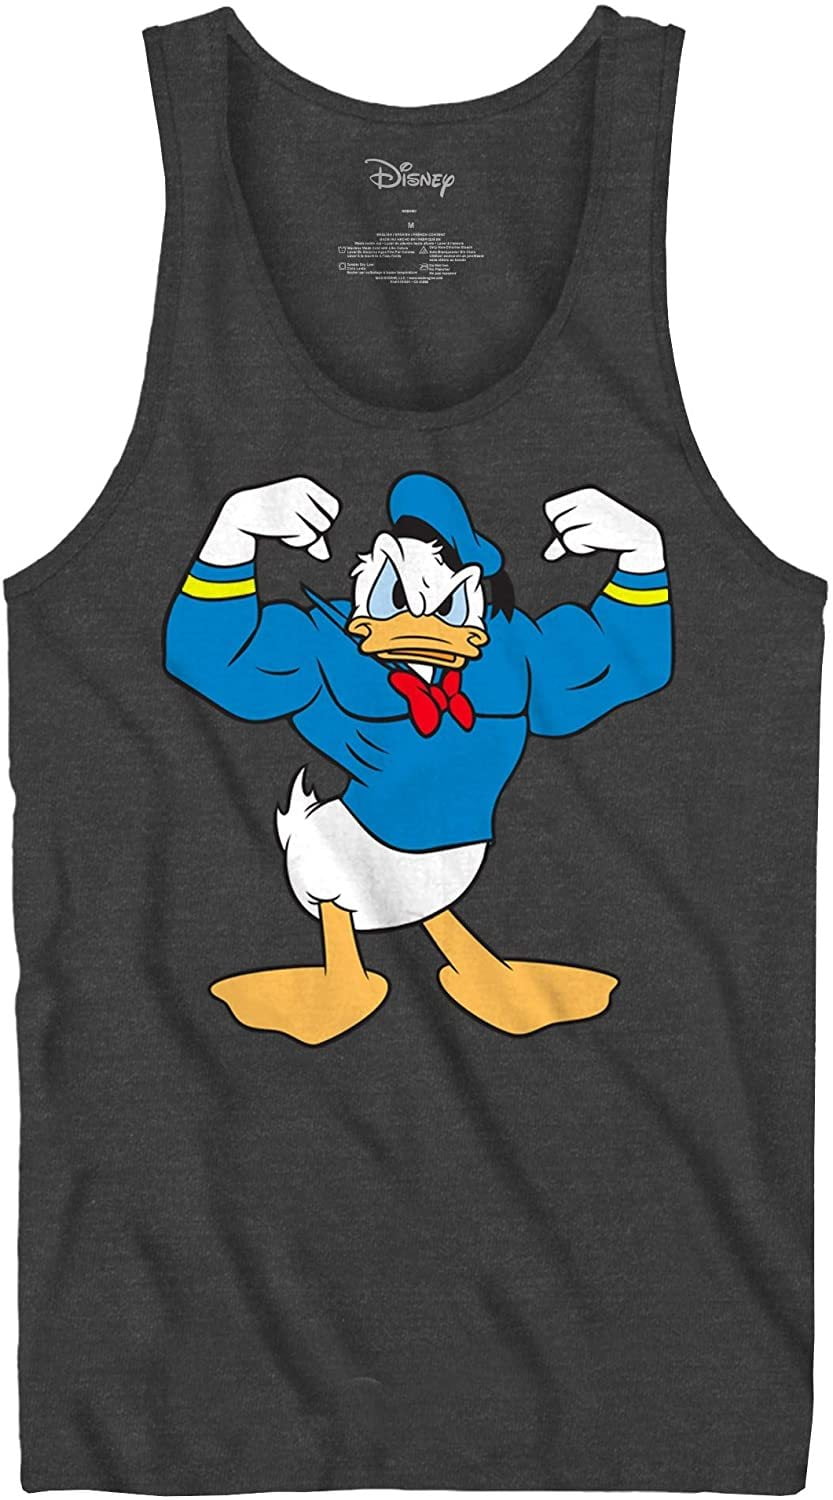 Disney Buff Donald Duck Muscle Sleeveless Workout